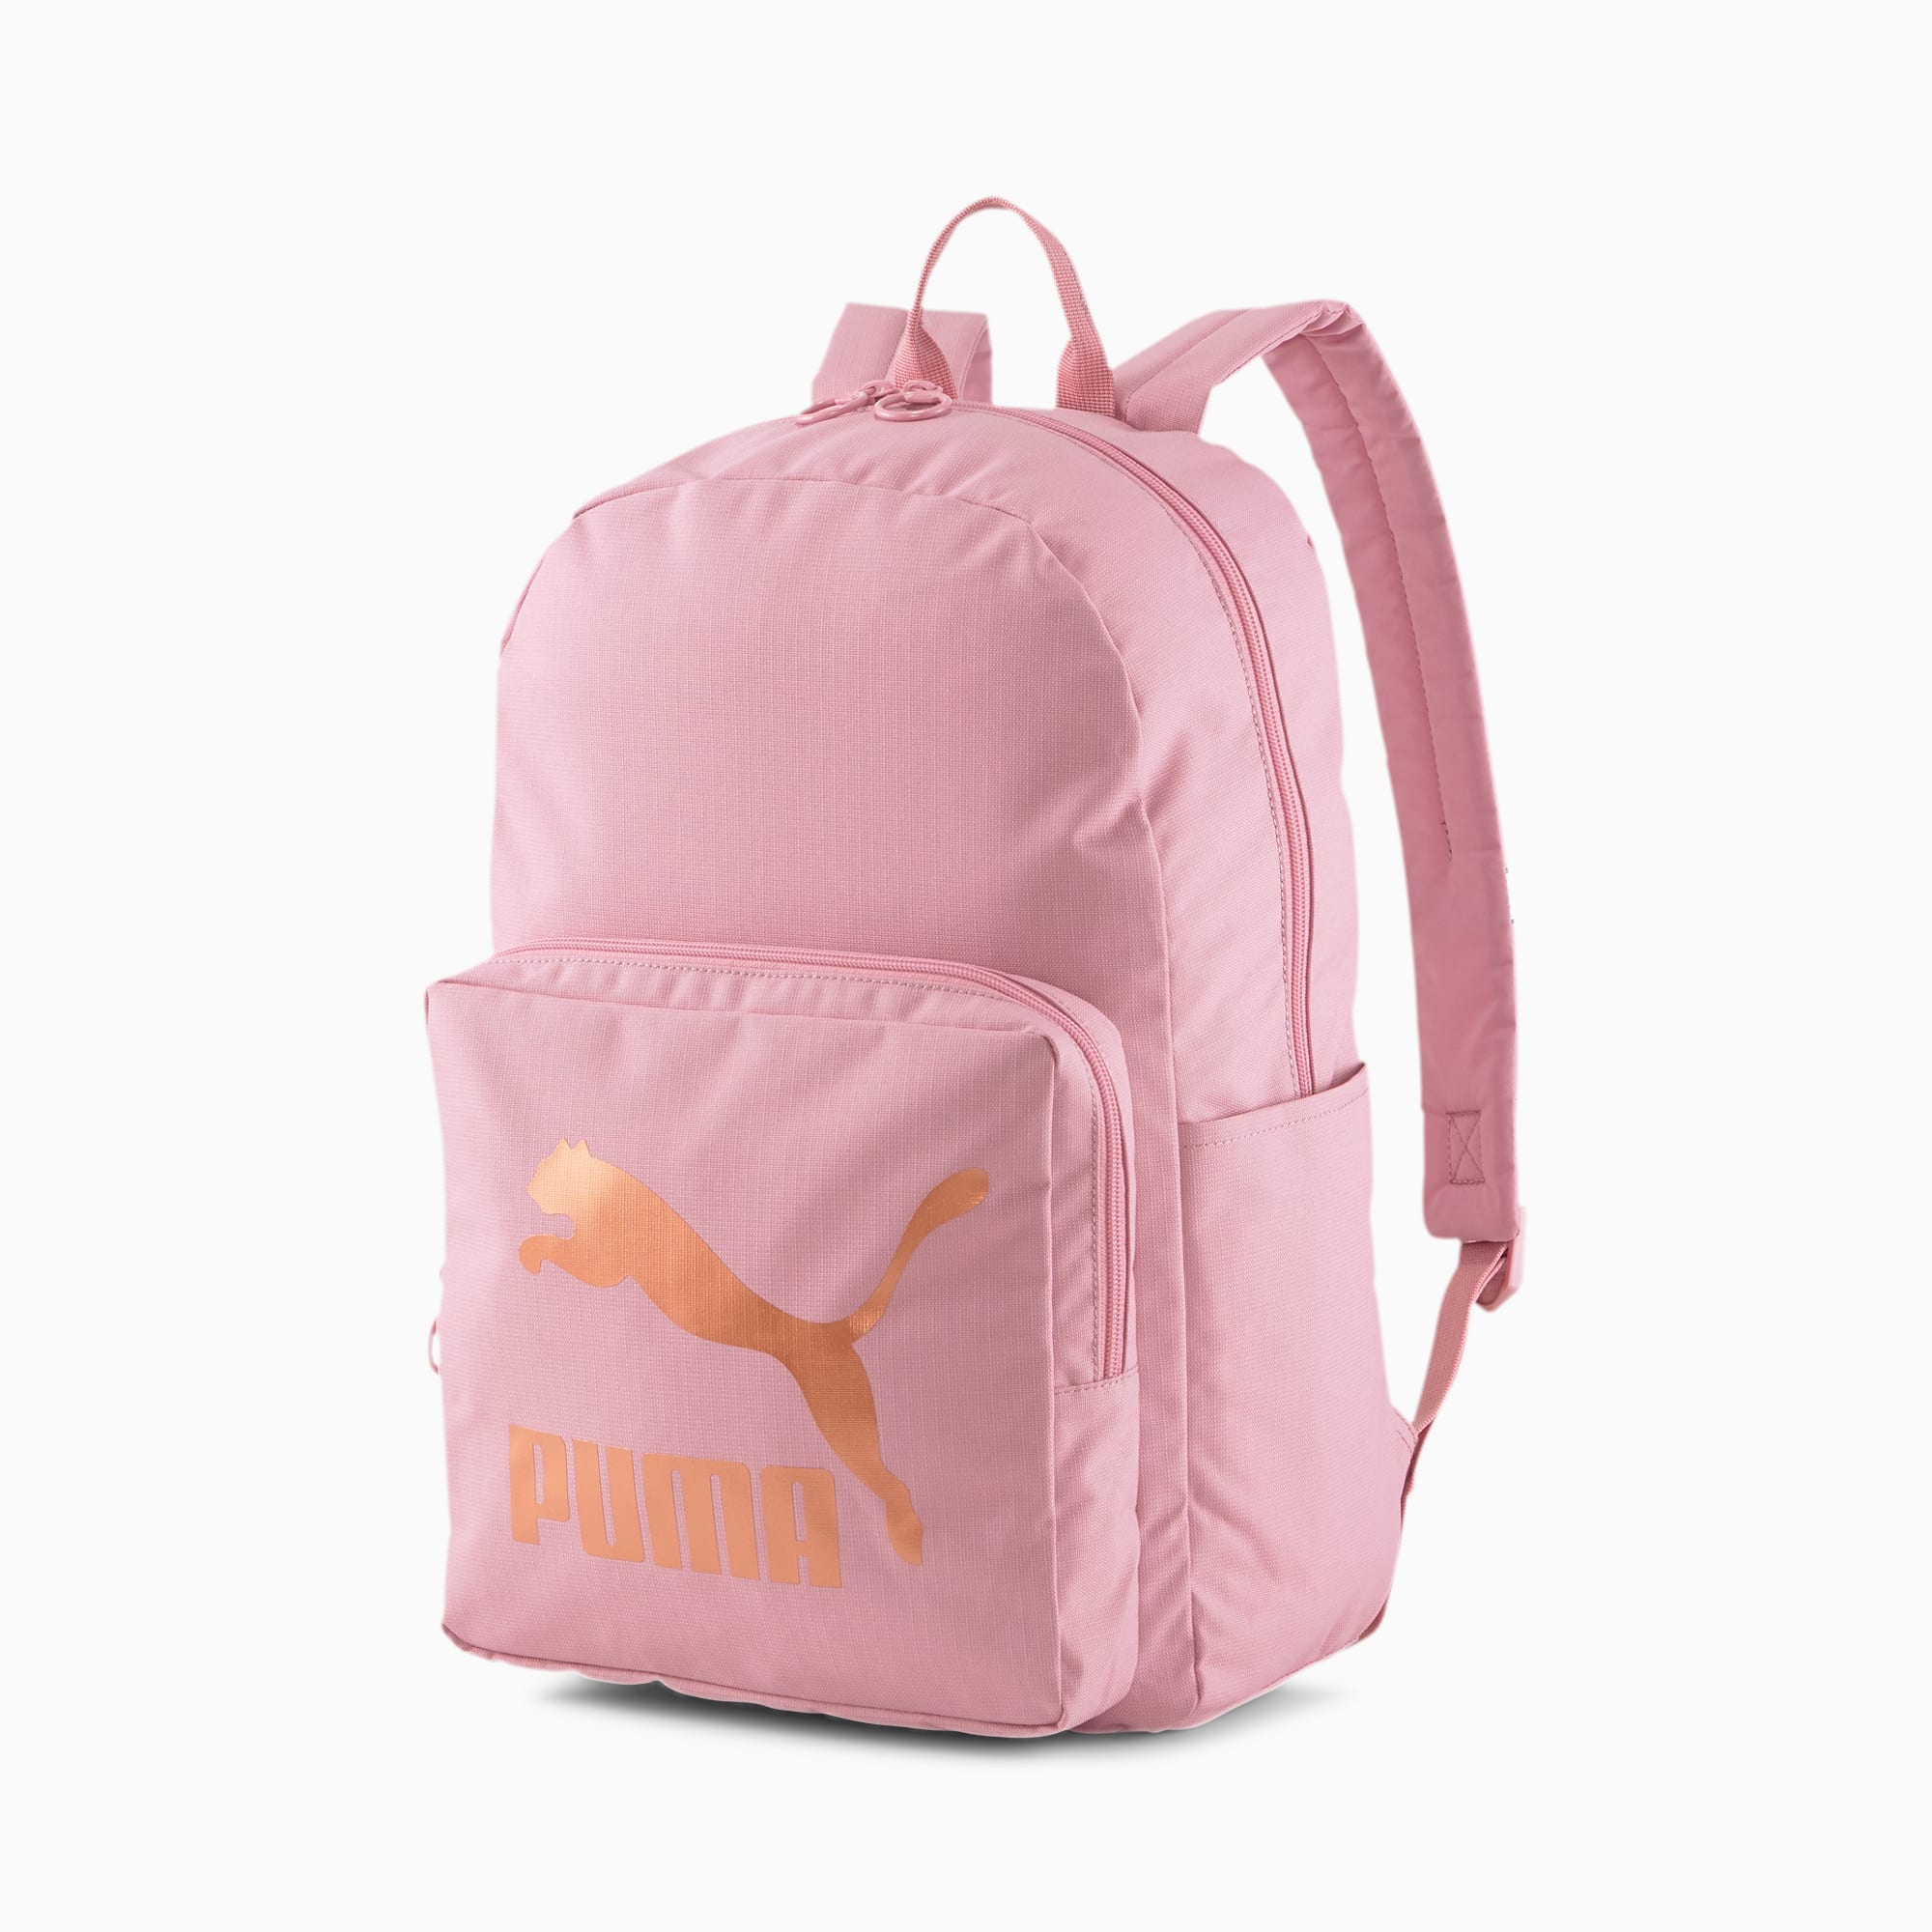 rose gold puma backpack